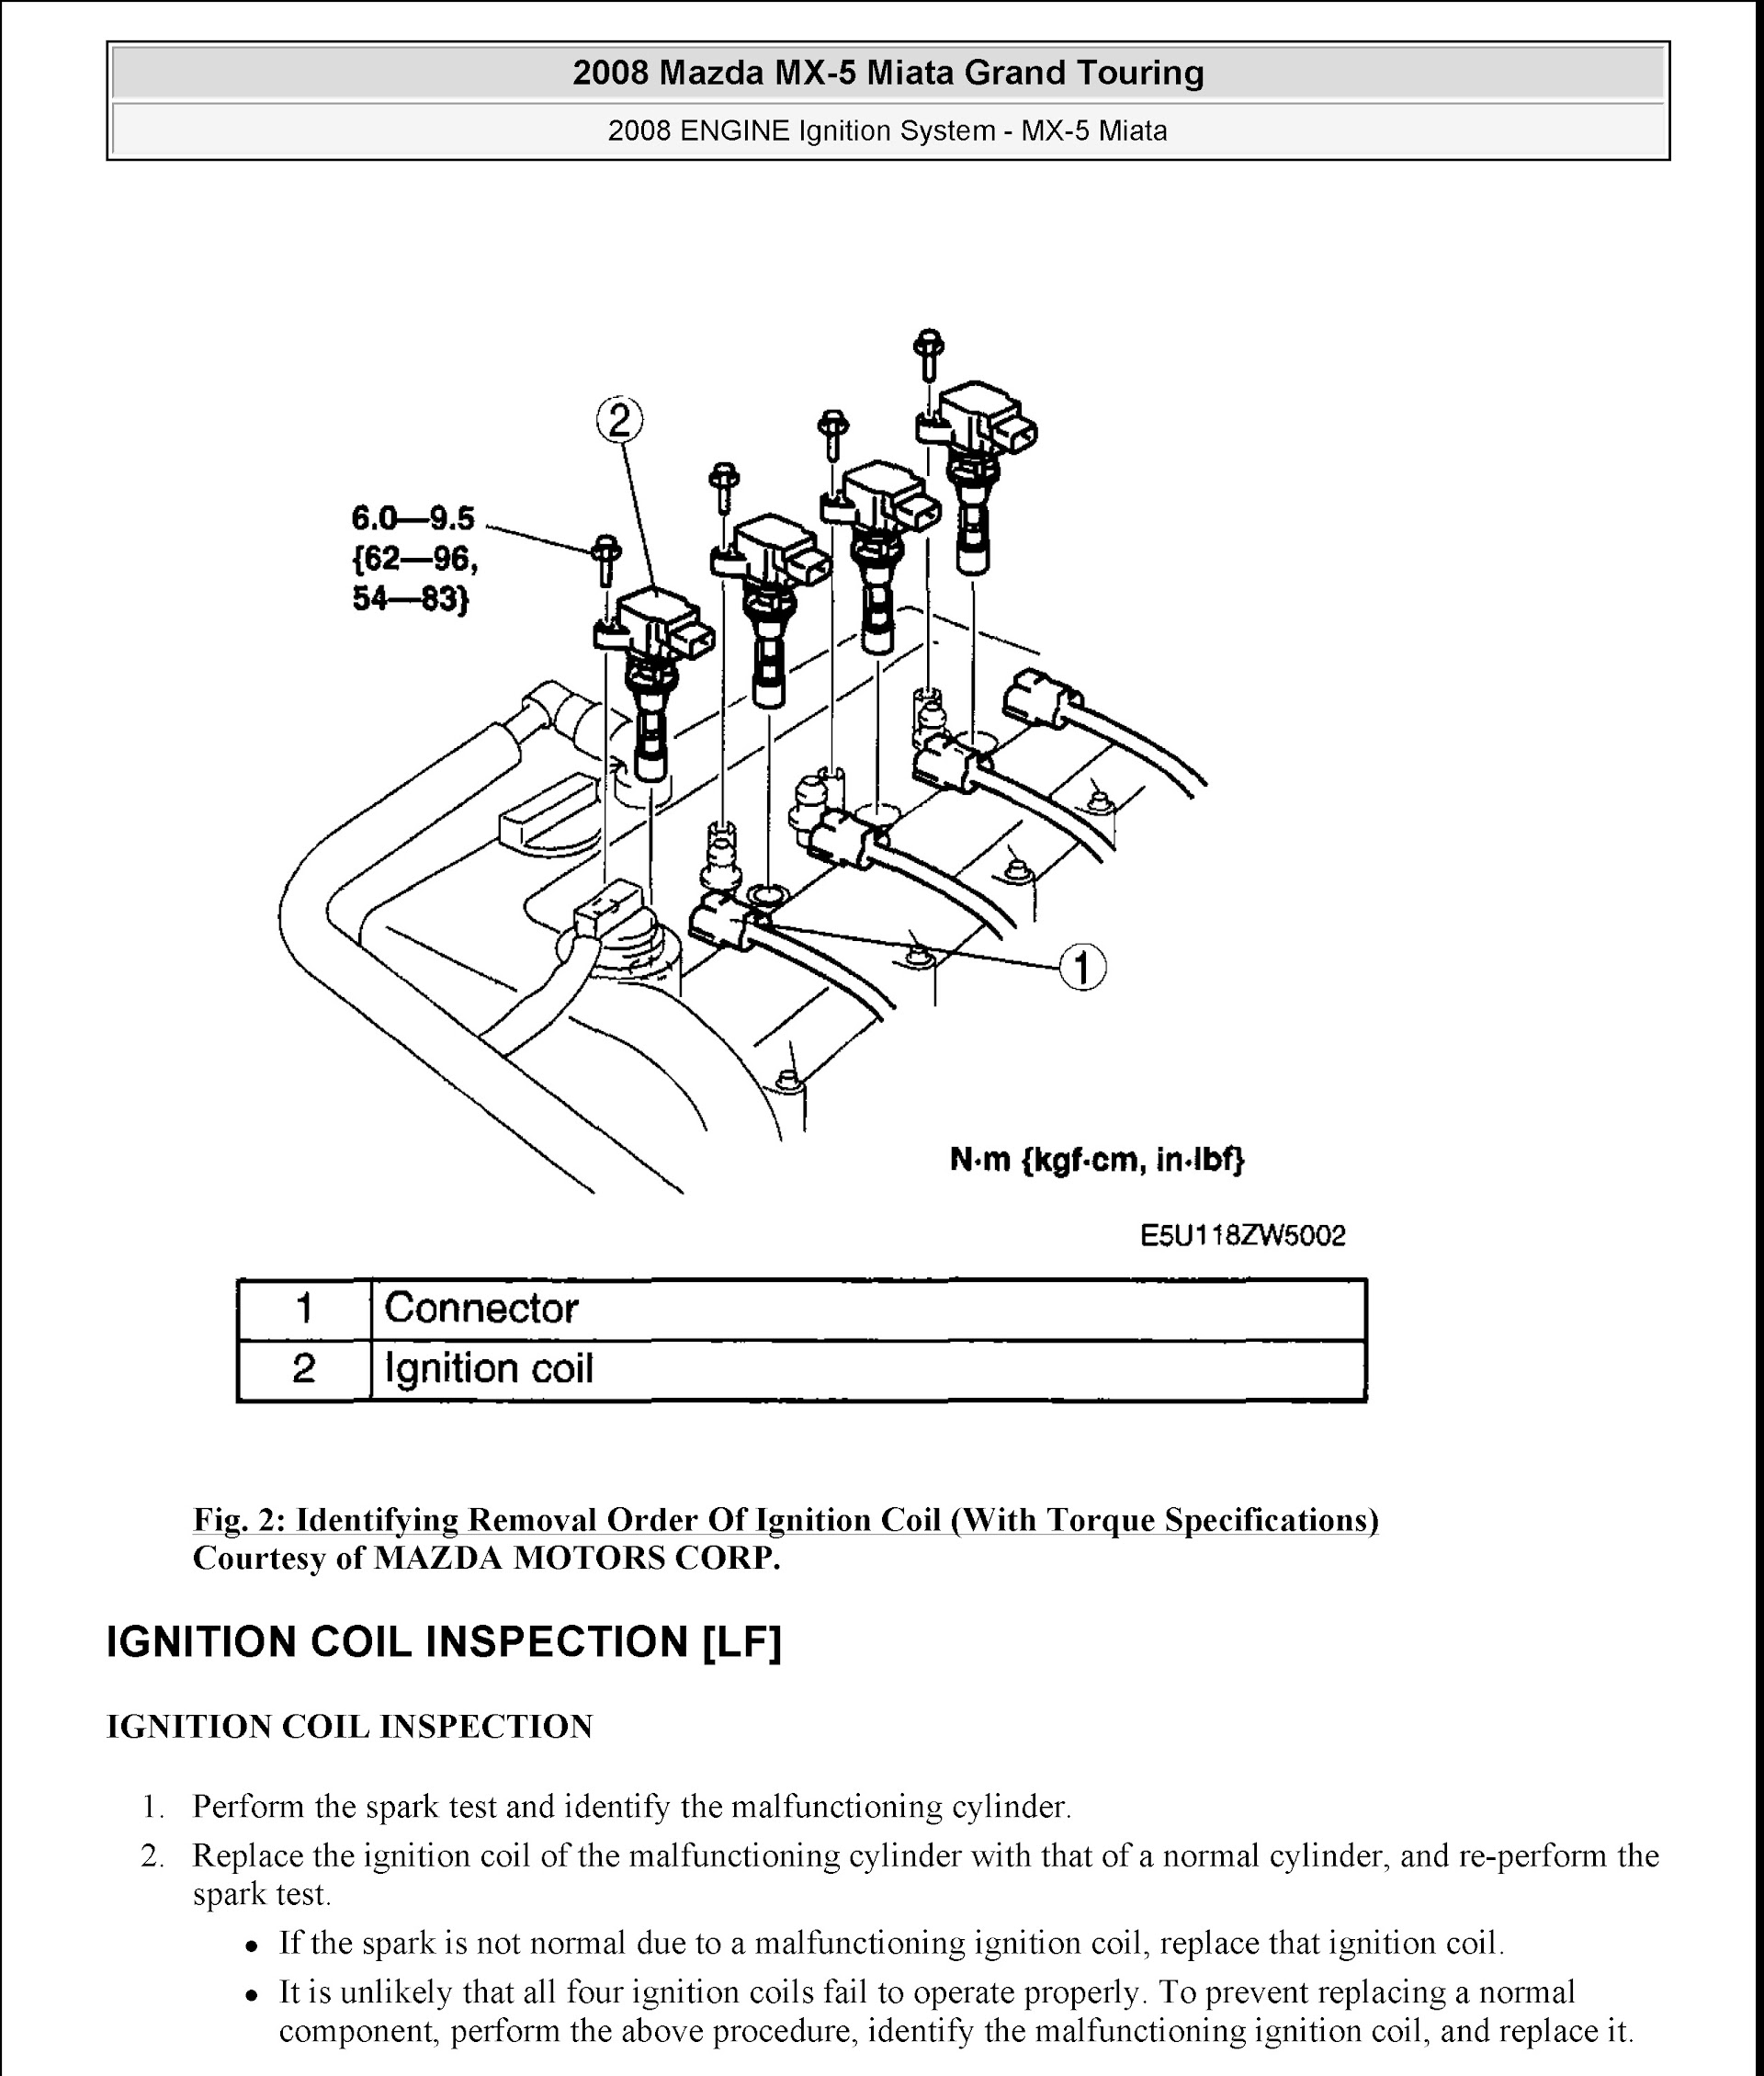 2006-2013 Mazda Miata MX-5 Repair Manual, Engine Ignition System